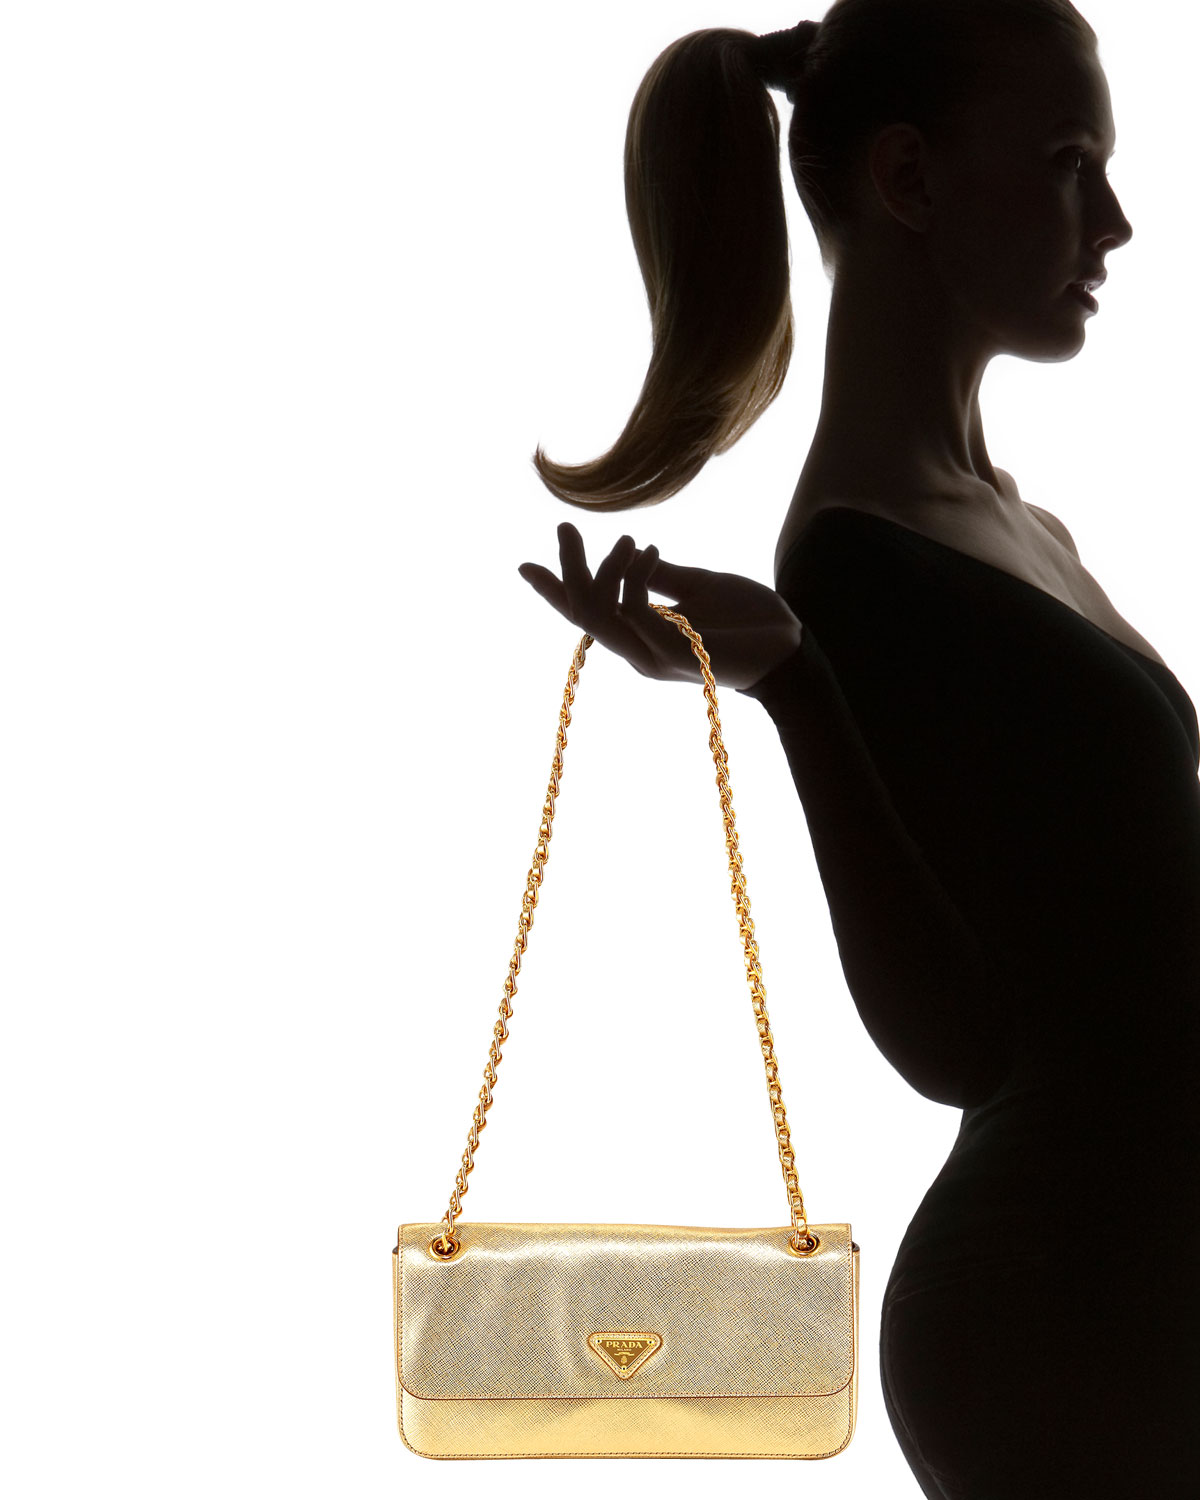 Prada Saffiano Lux Chain Shoulder Bag in Gold | Lyst